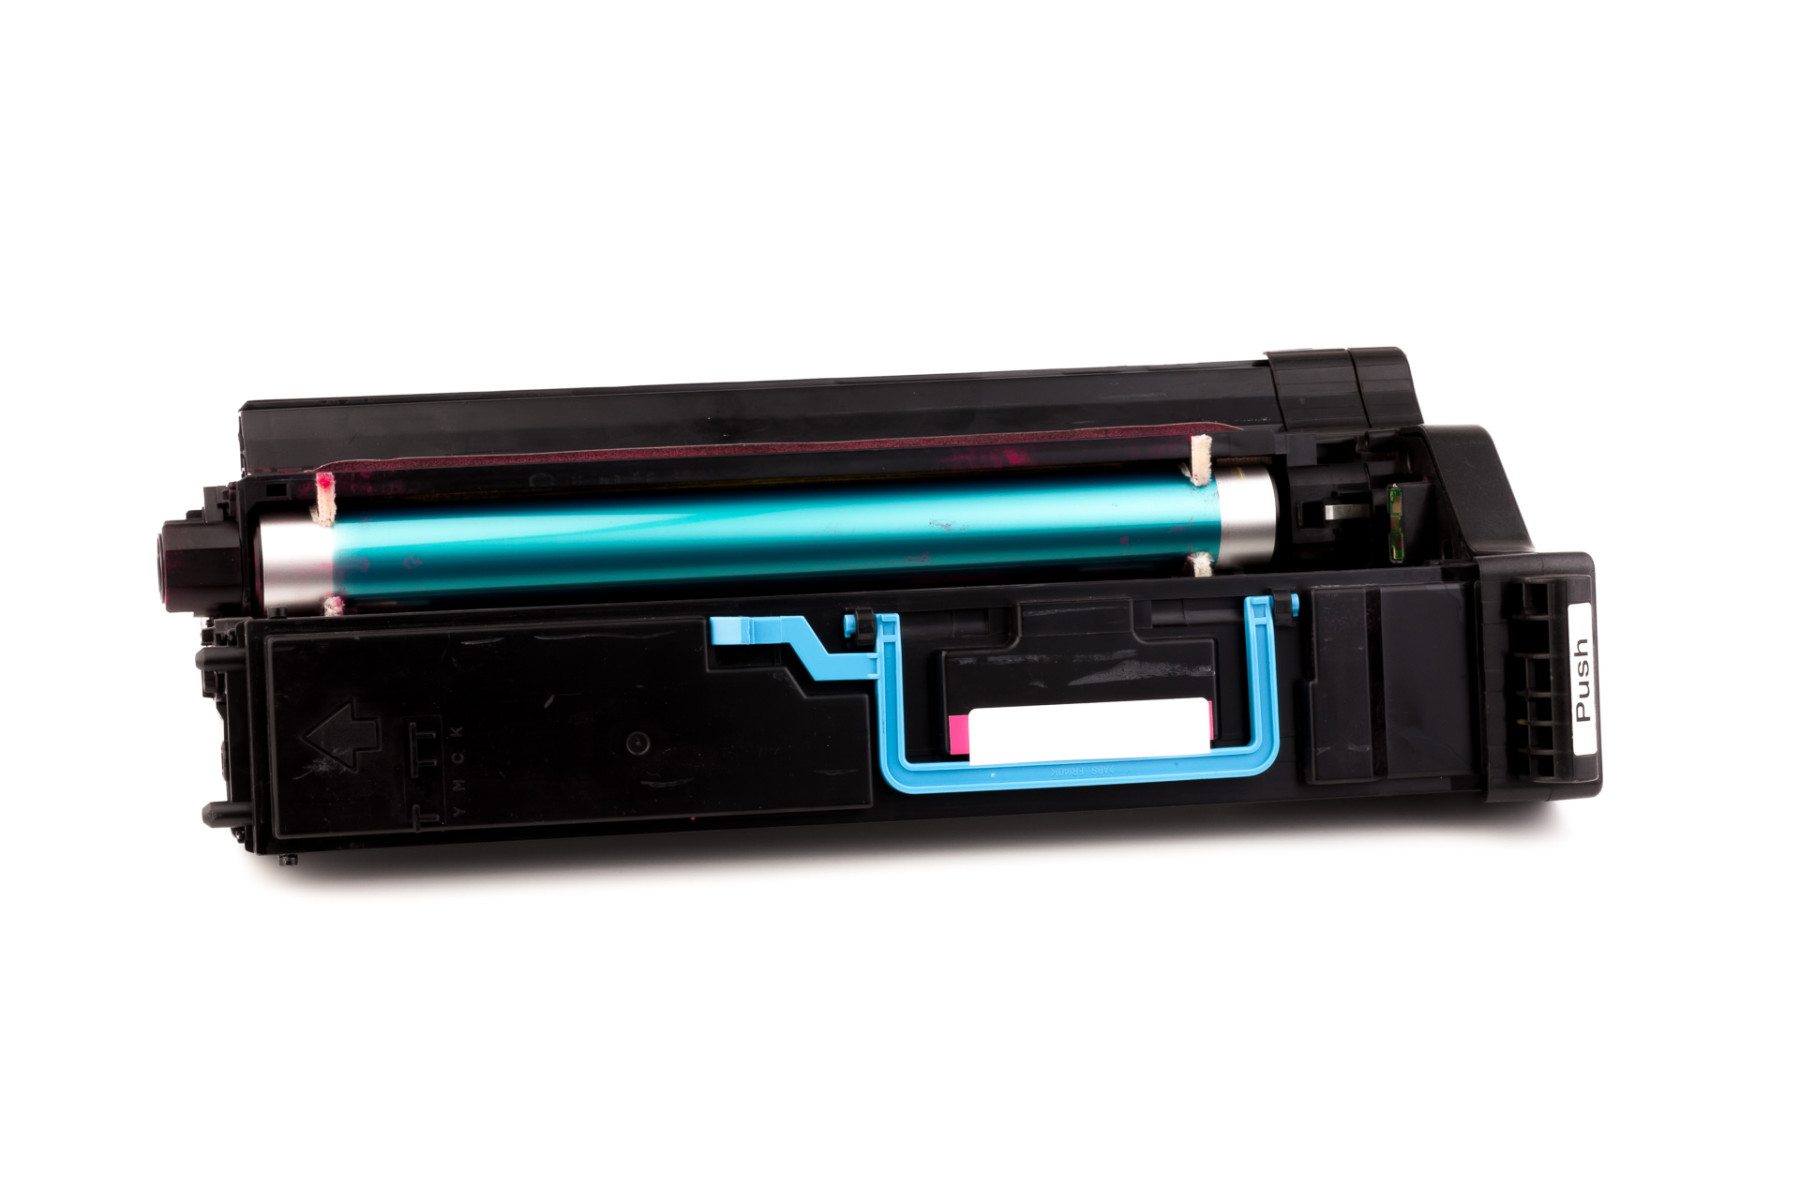 Set consisting of Toner cartridge (alternative) compatible with Konica Minolta Magicolor 5430 Serien black, cyan, magenta, yellow - Save 6%